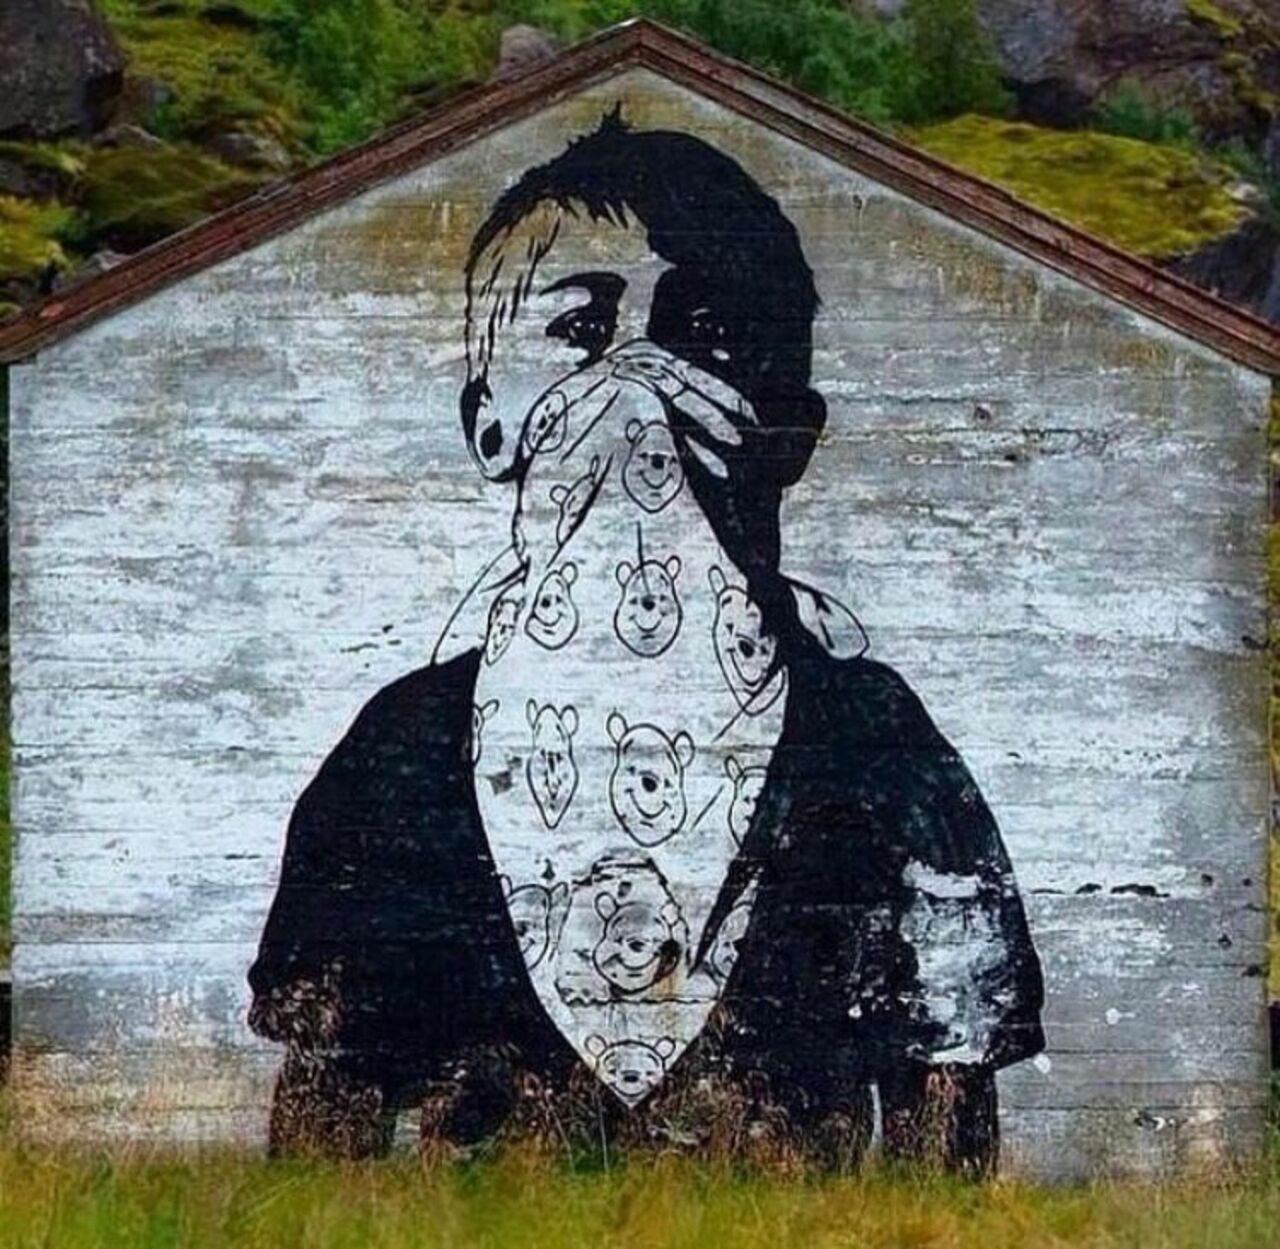 New work by Dolk in Norway #streetart #mural #graffiti #art https://t.co/HPx98nuruw